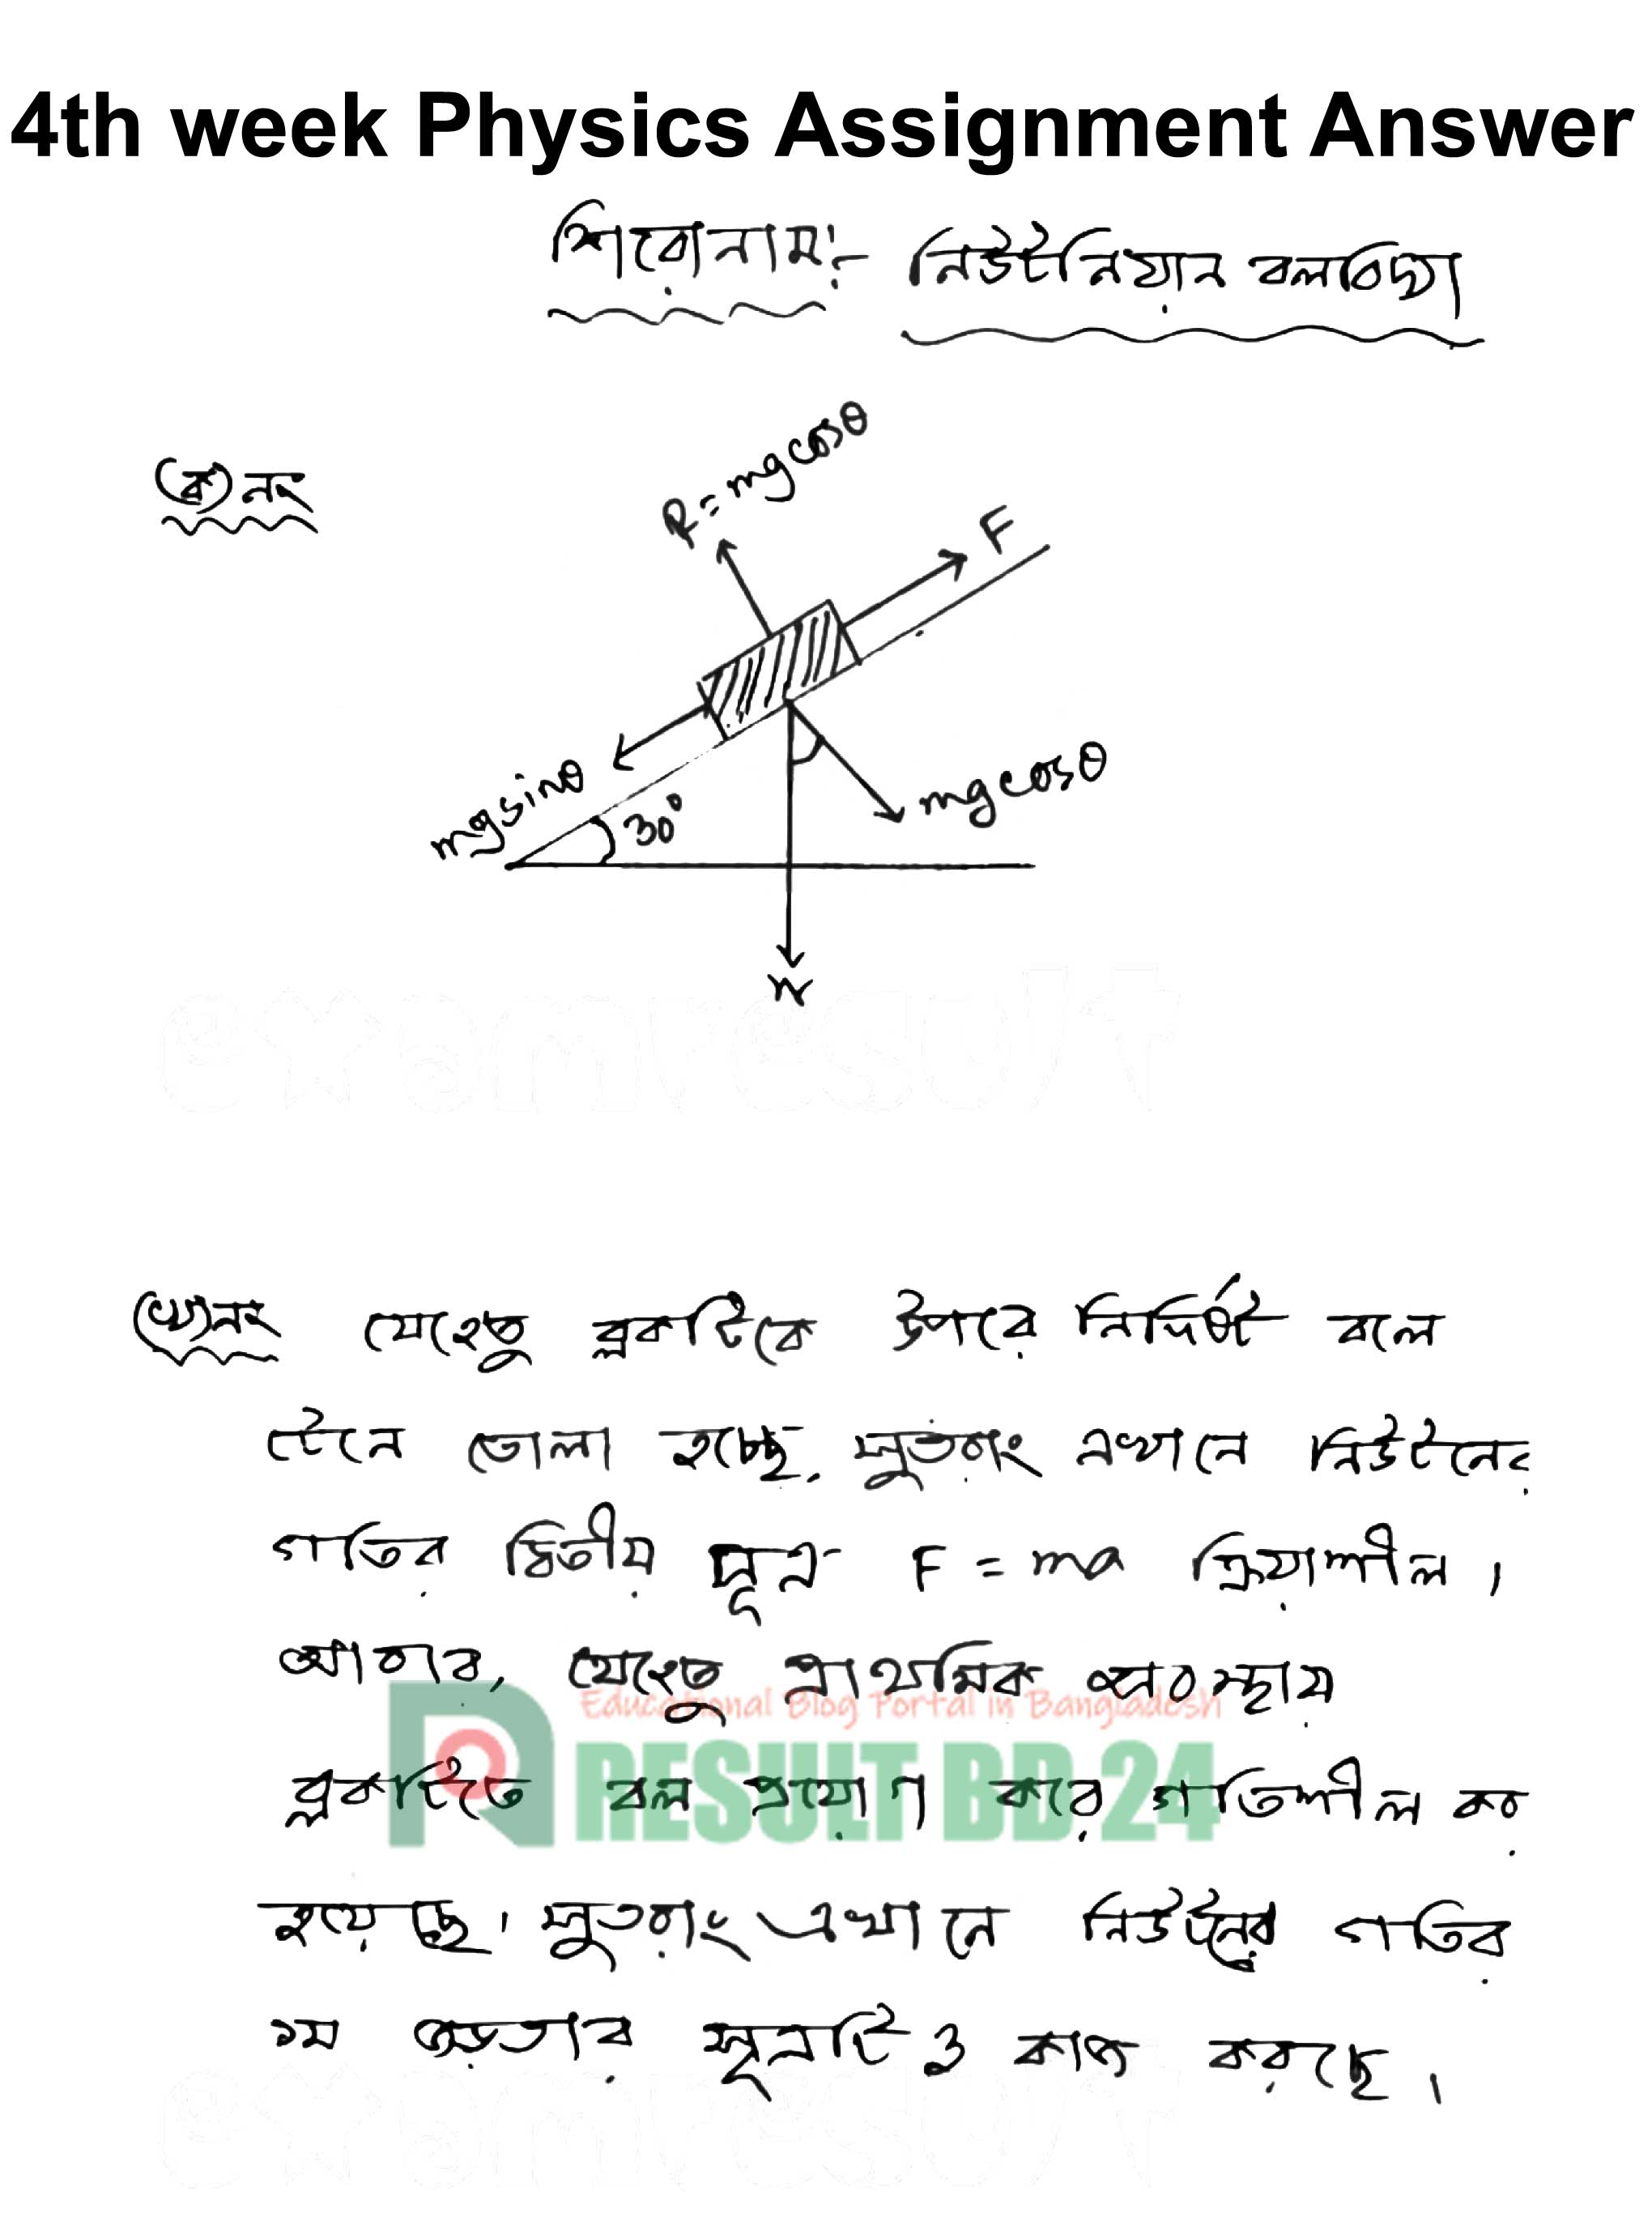 hsc assignment answer physics